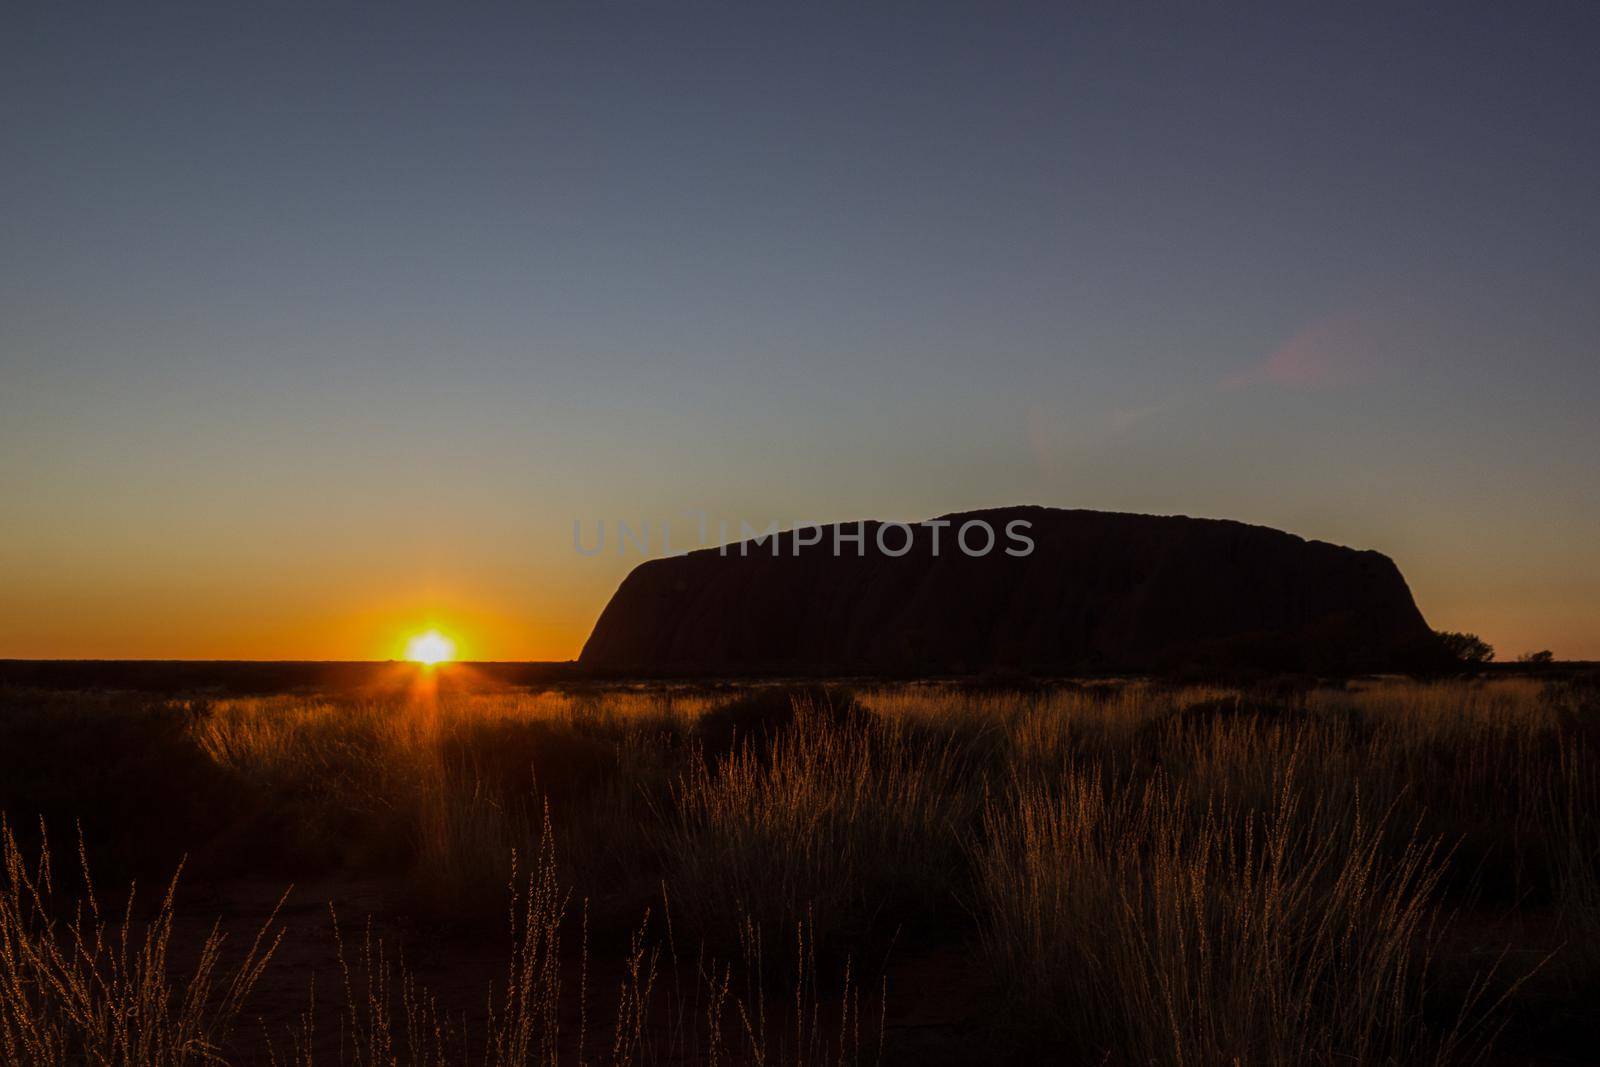 Sunrise at Uluru, ayers Rock, the Red Center of Australia